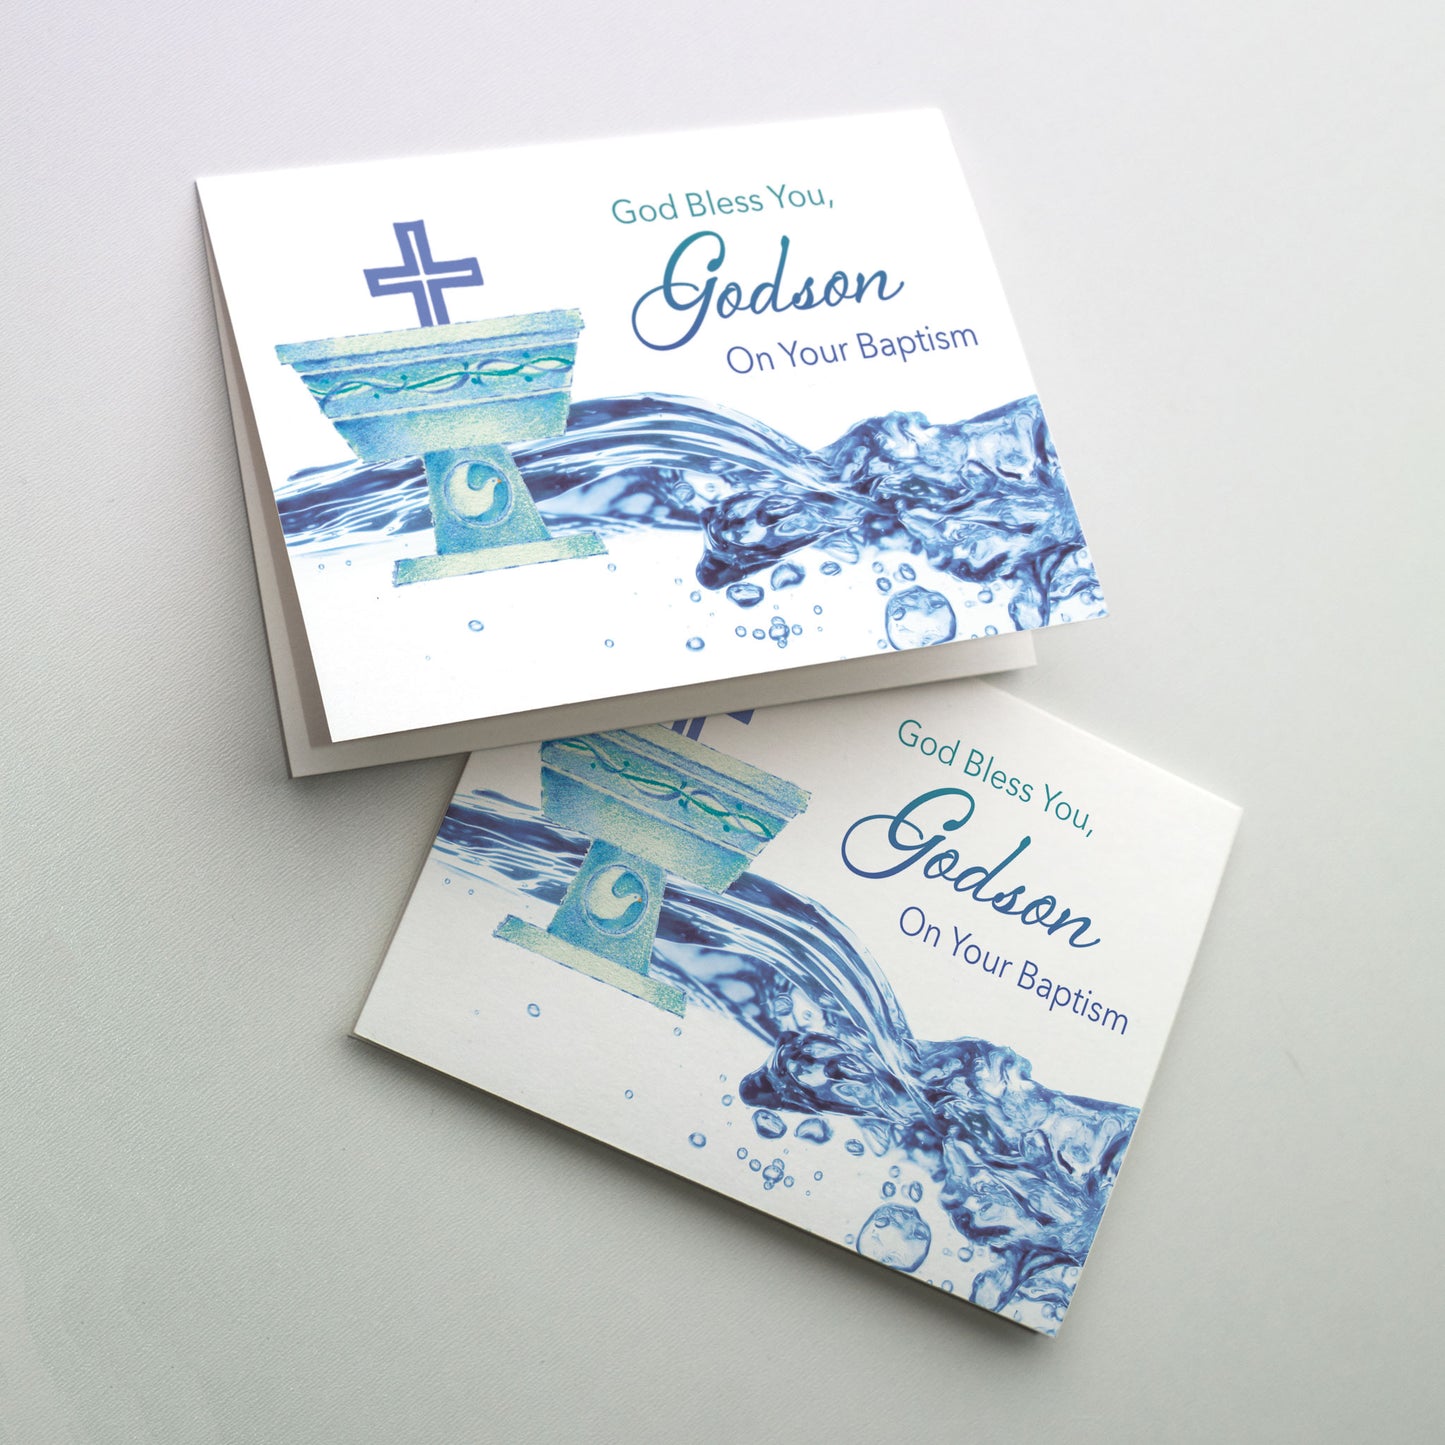 God Bless You, Godson, on Your Baptism - Baptism Card for Godson